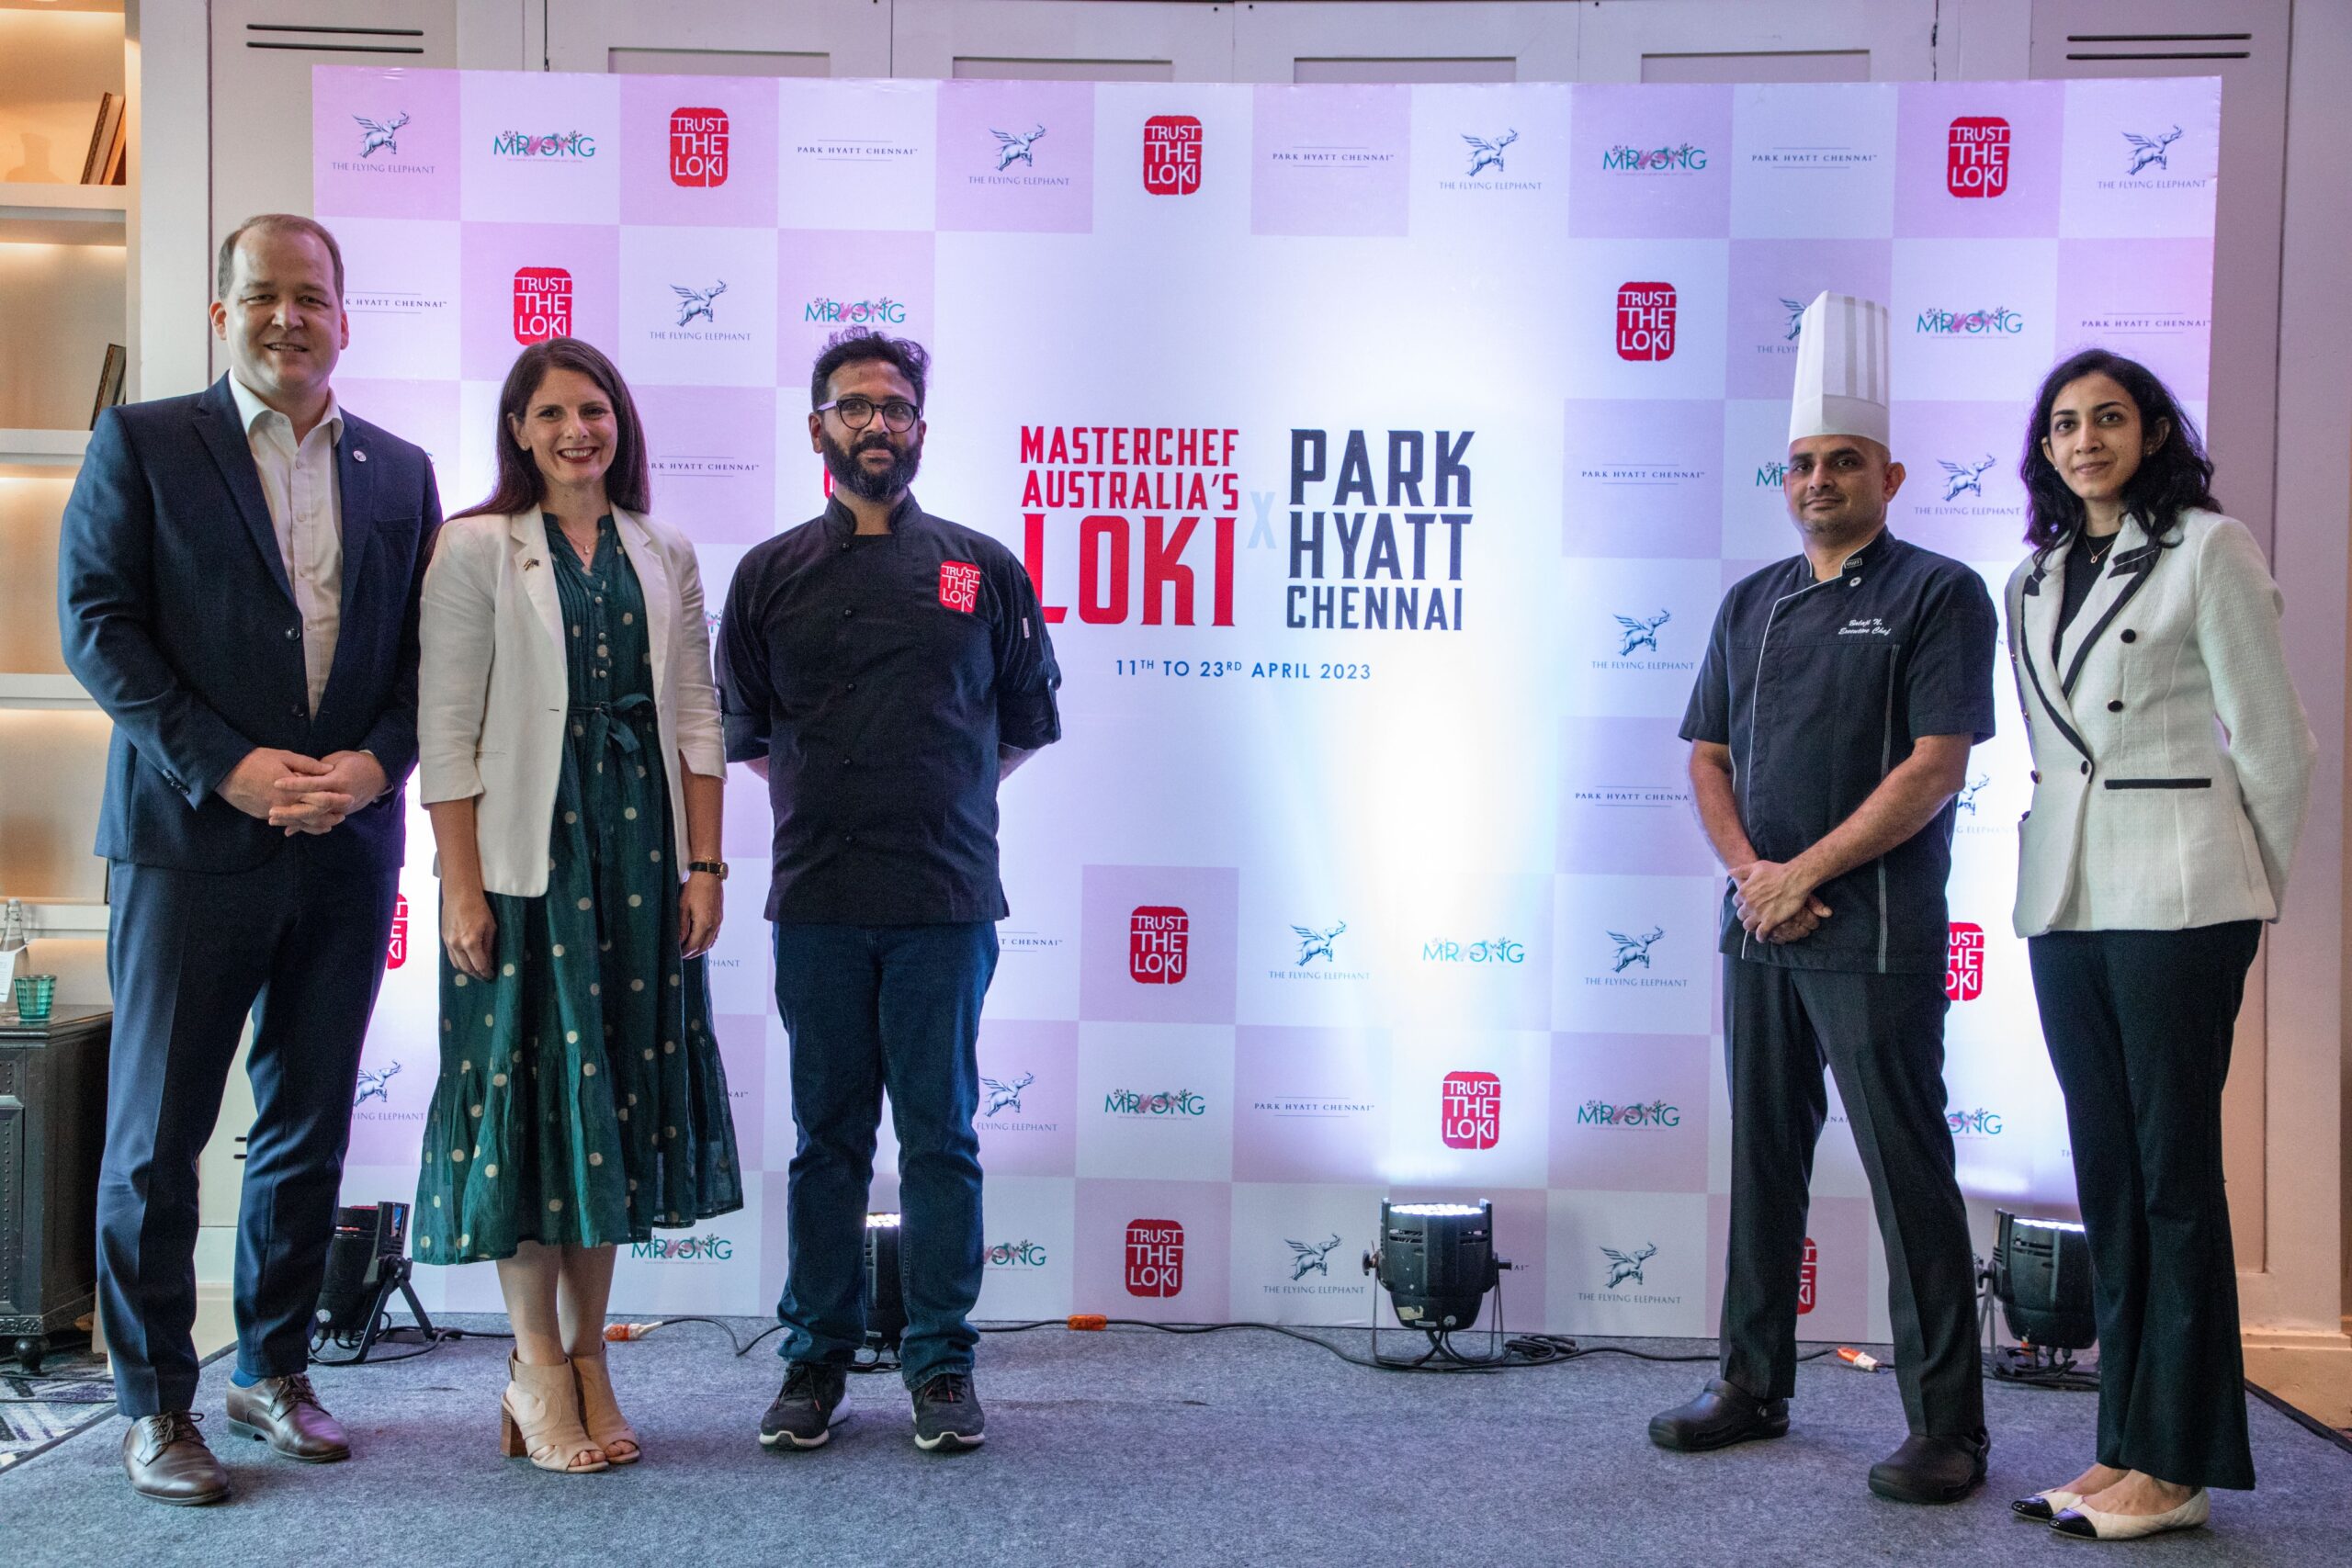 Park Hyatt Chennai collaborates with Chef Loki